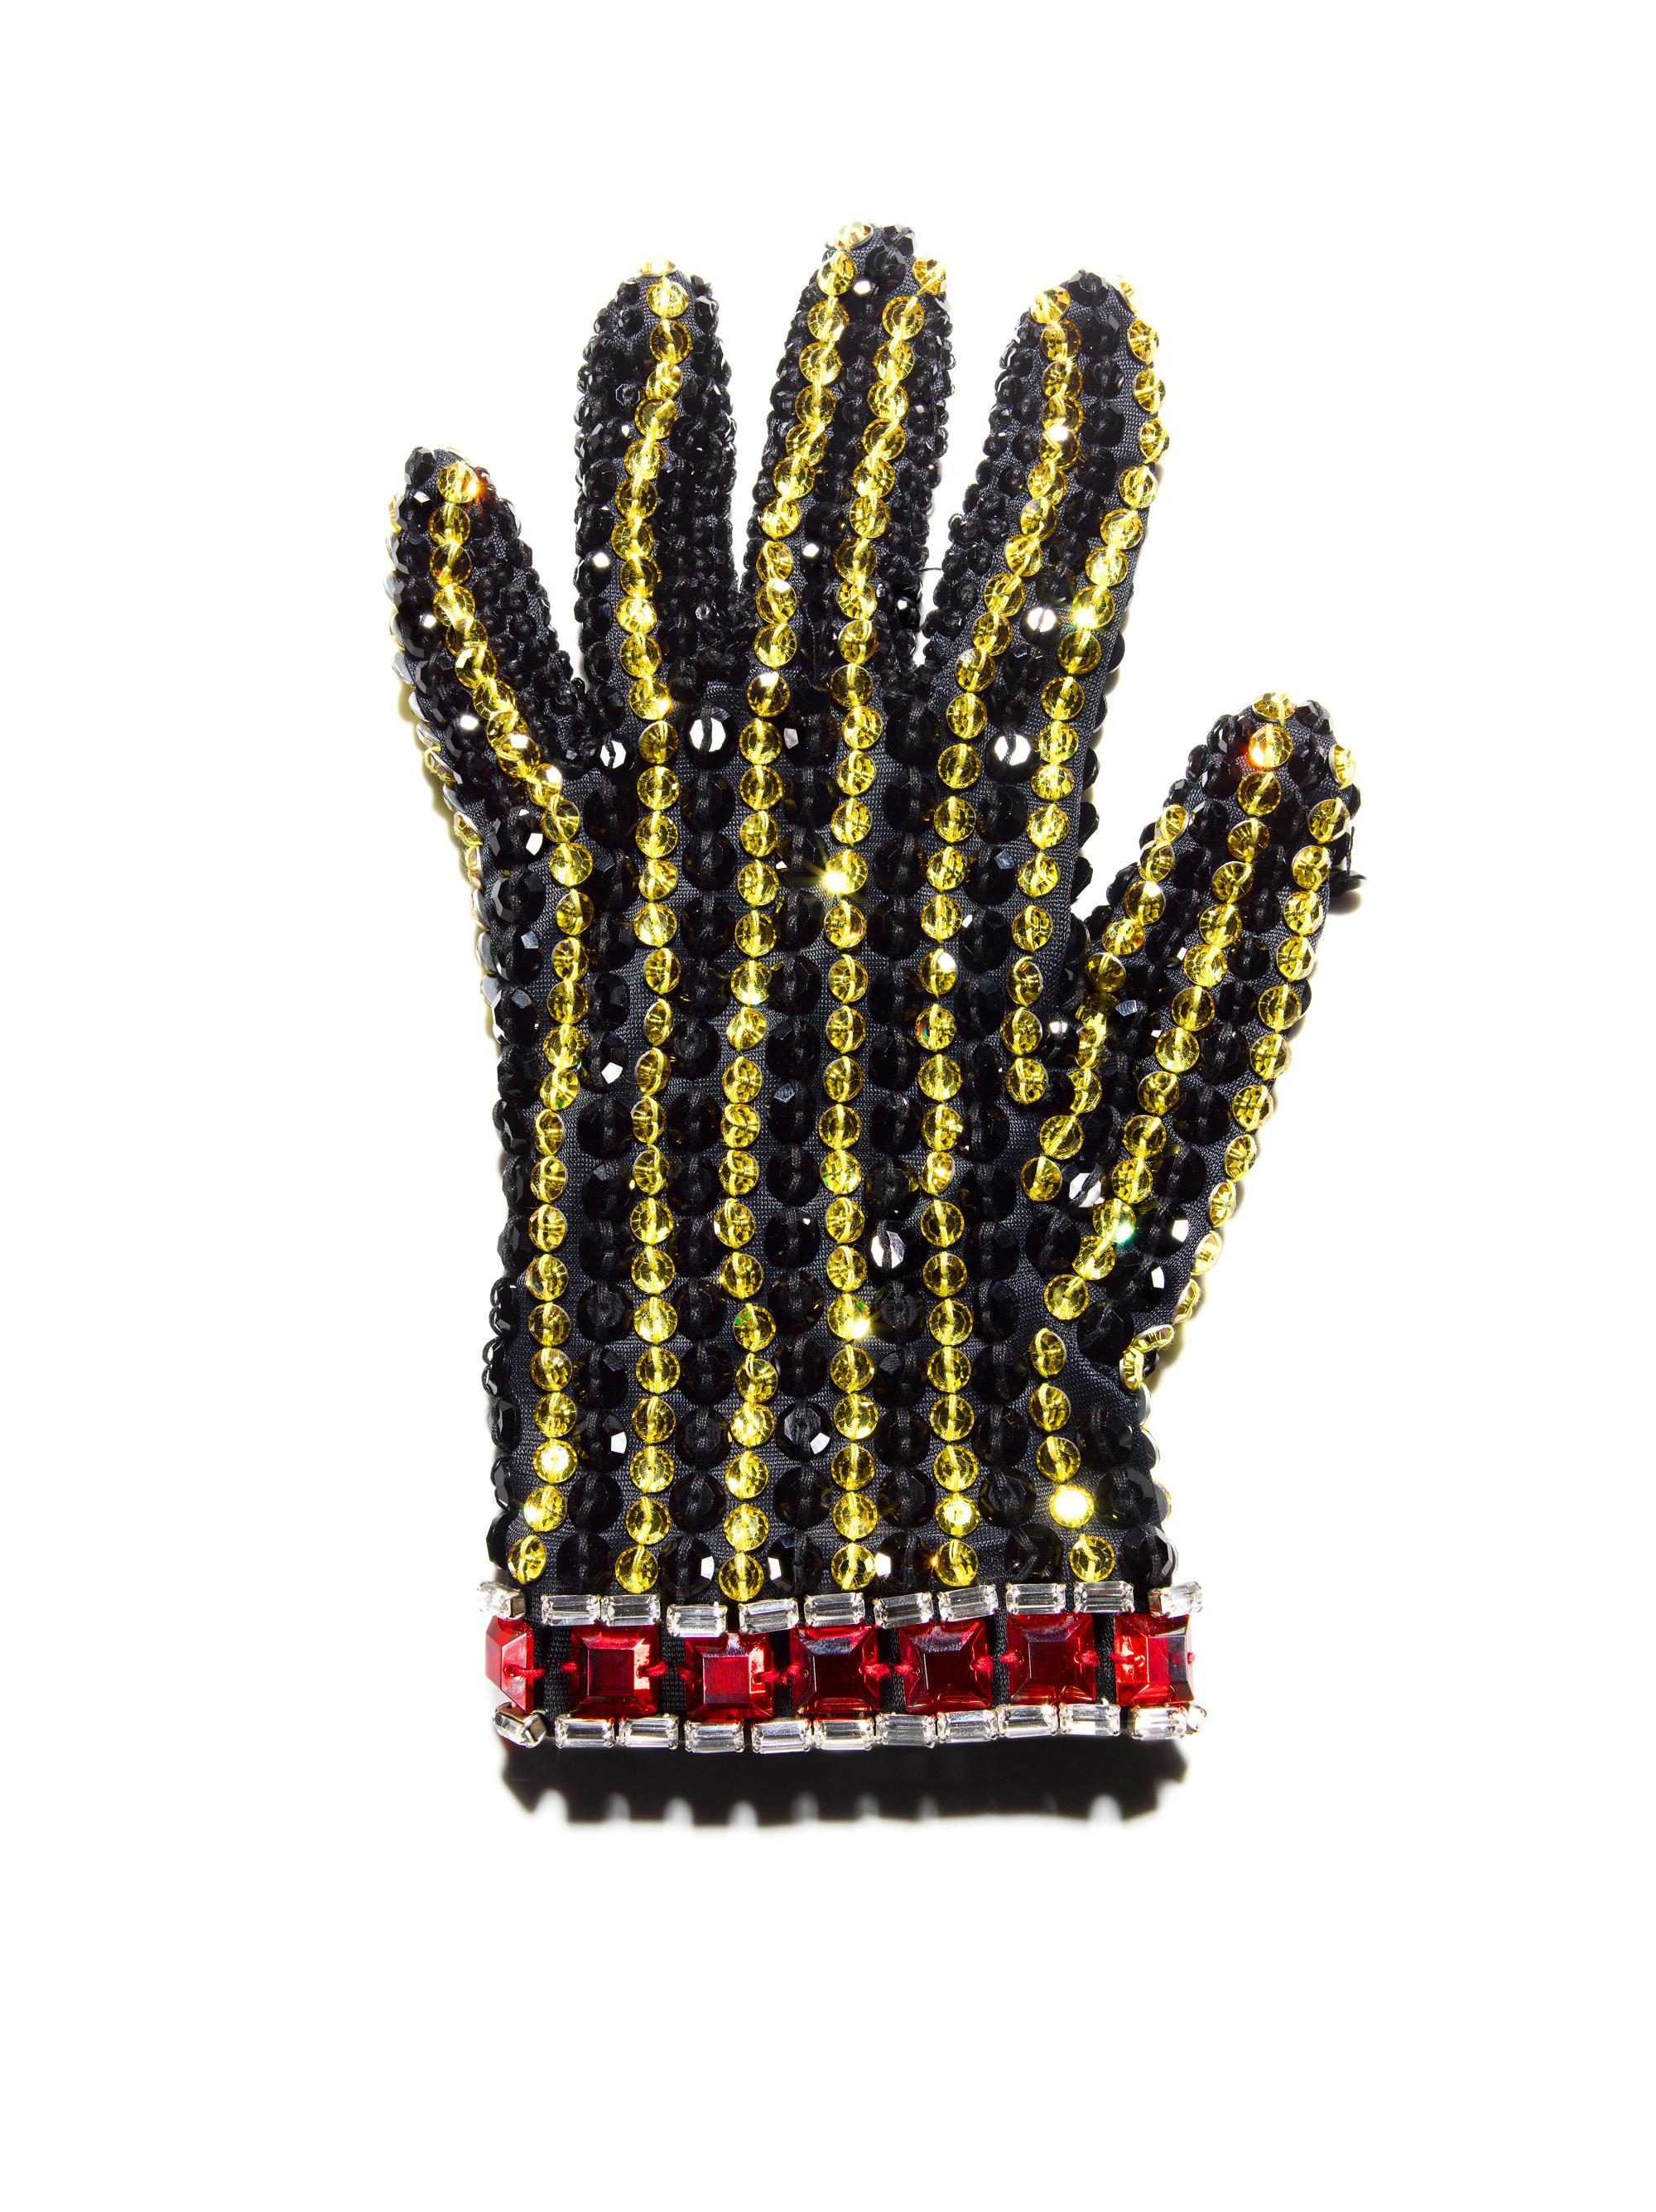 Still-Life Photograph Tom Schierlitz - « Black Glove » (Michael Jackson) 121,9 x 162,6 cm  